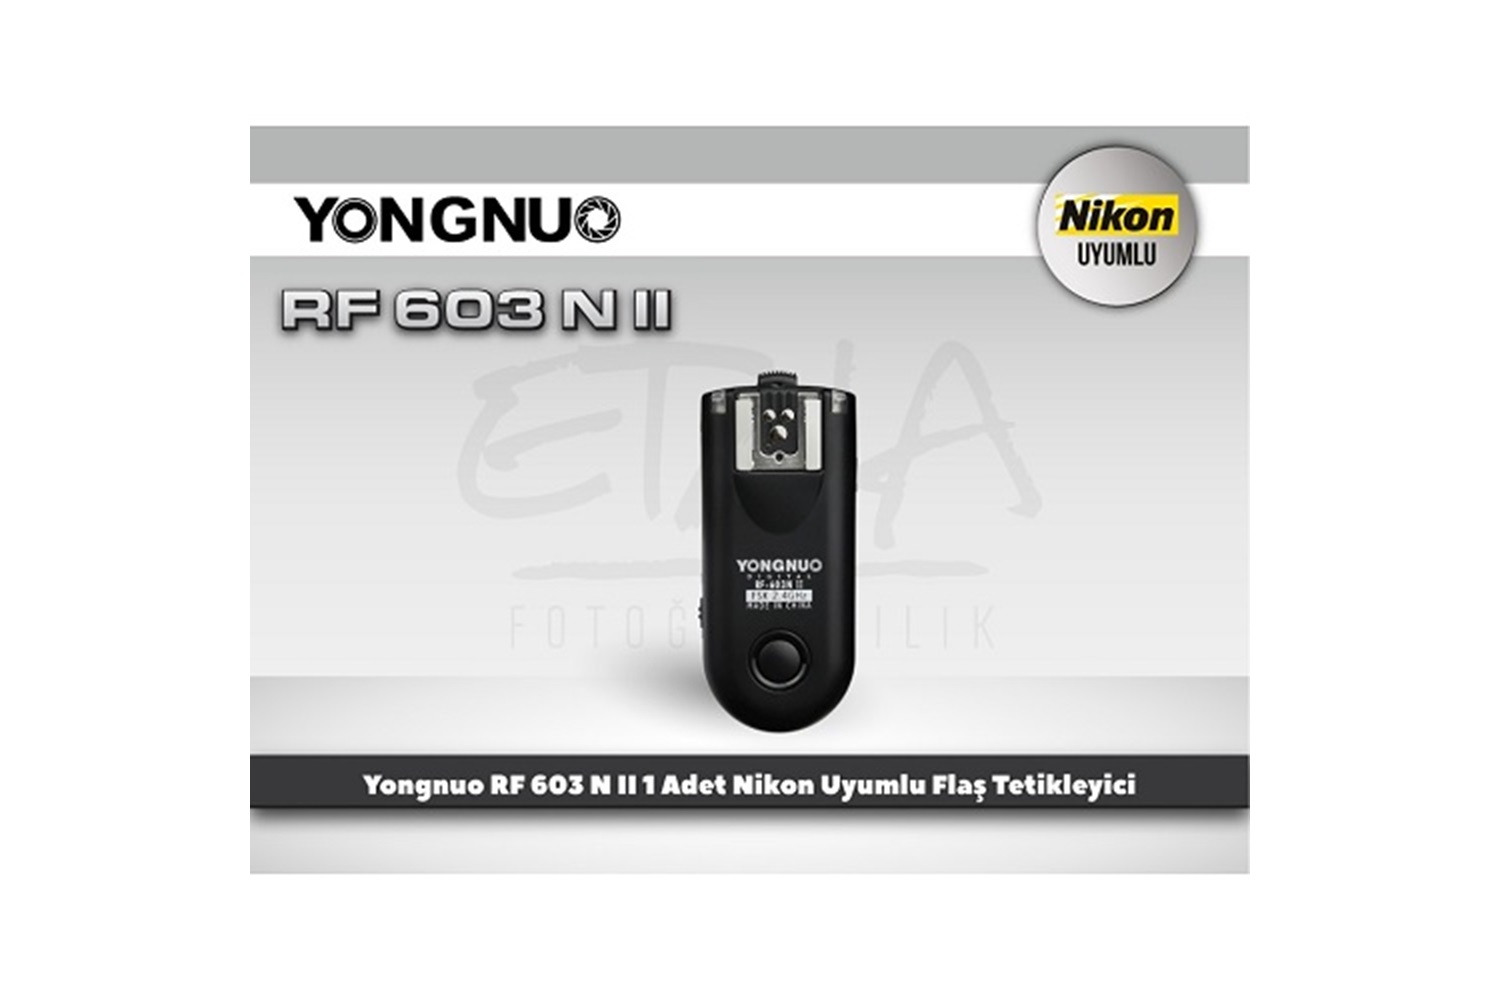 Yongnuo RF603 N II Nikon Uyumlu Flaş Tetikleyici 1 Adet